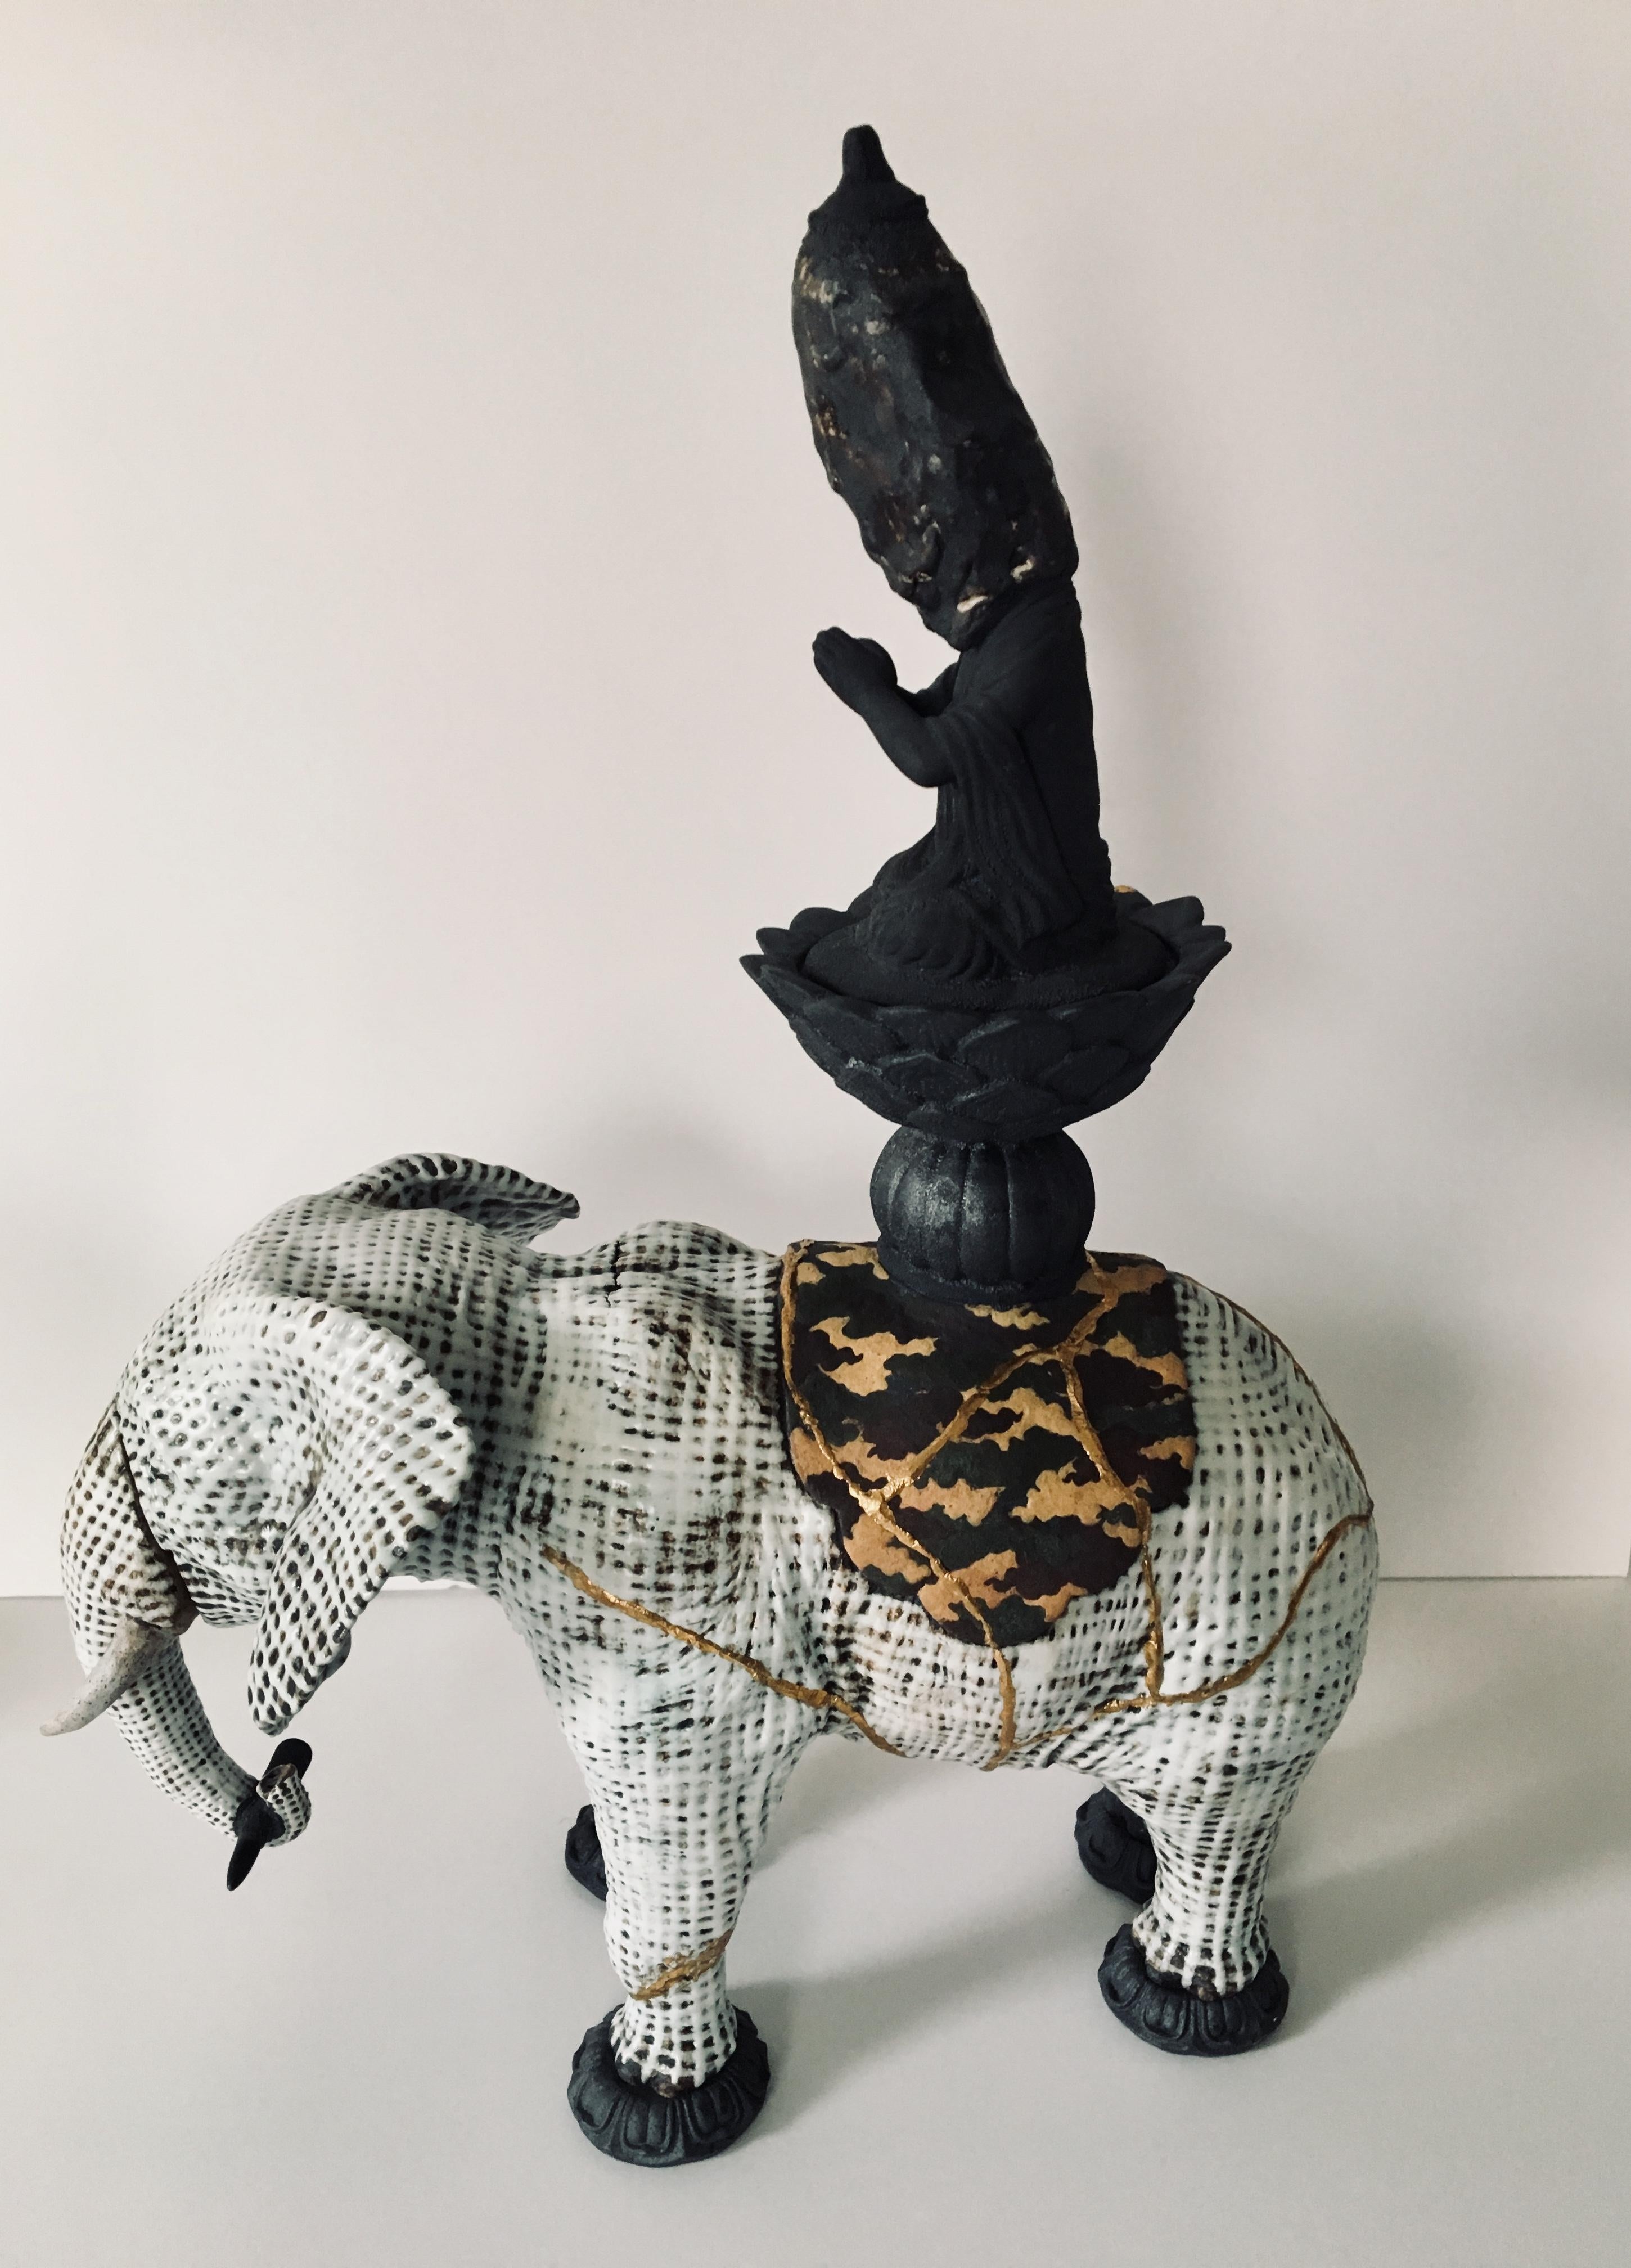 Kenjiro Kitade Figurative Sculpture - Ceramic Sculpture of elephant: 'Samantabhadra' (Sanskirt for Universal Worthy)